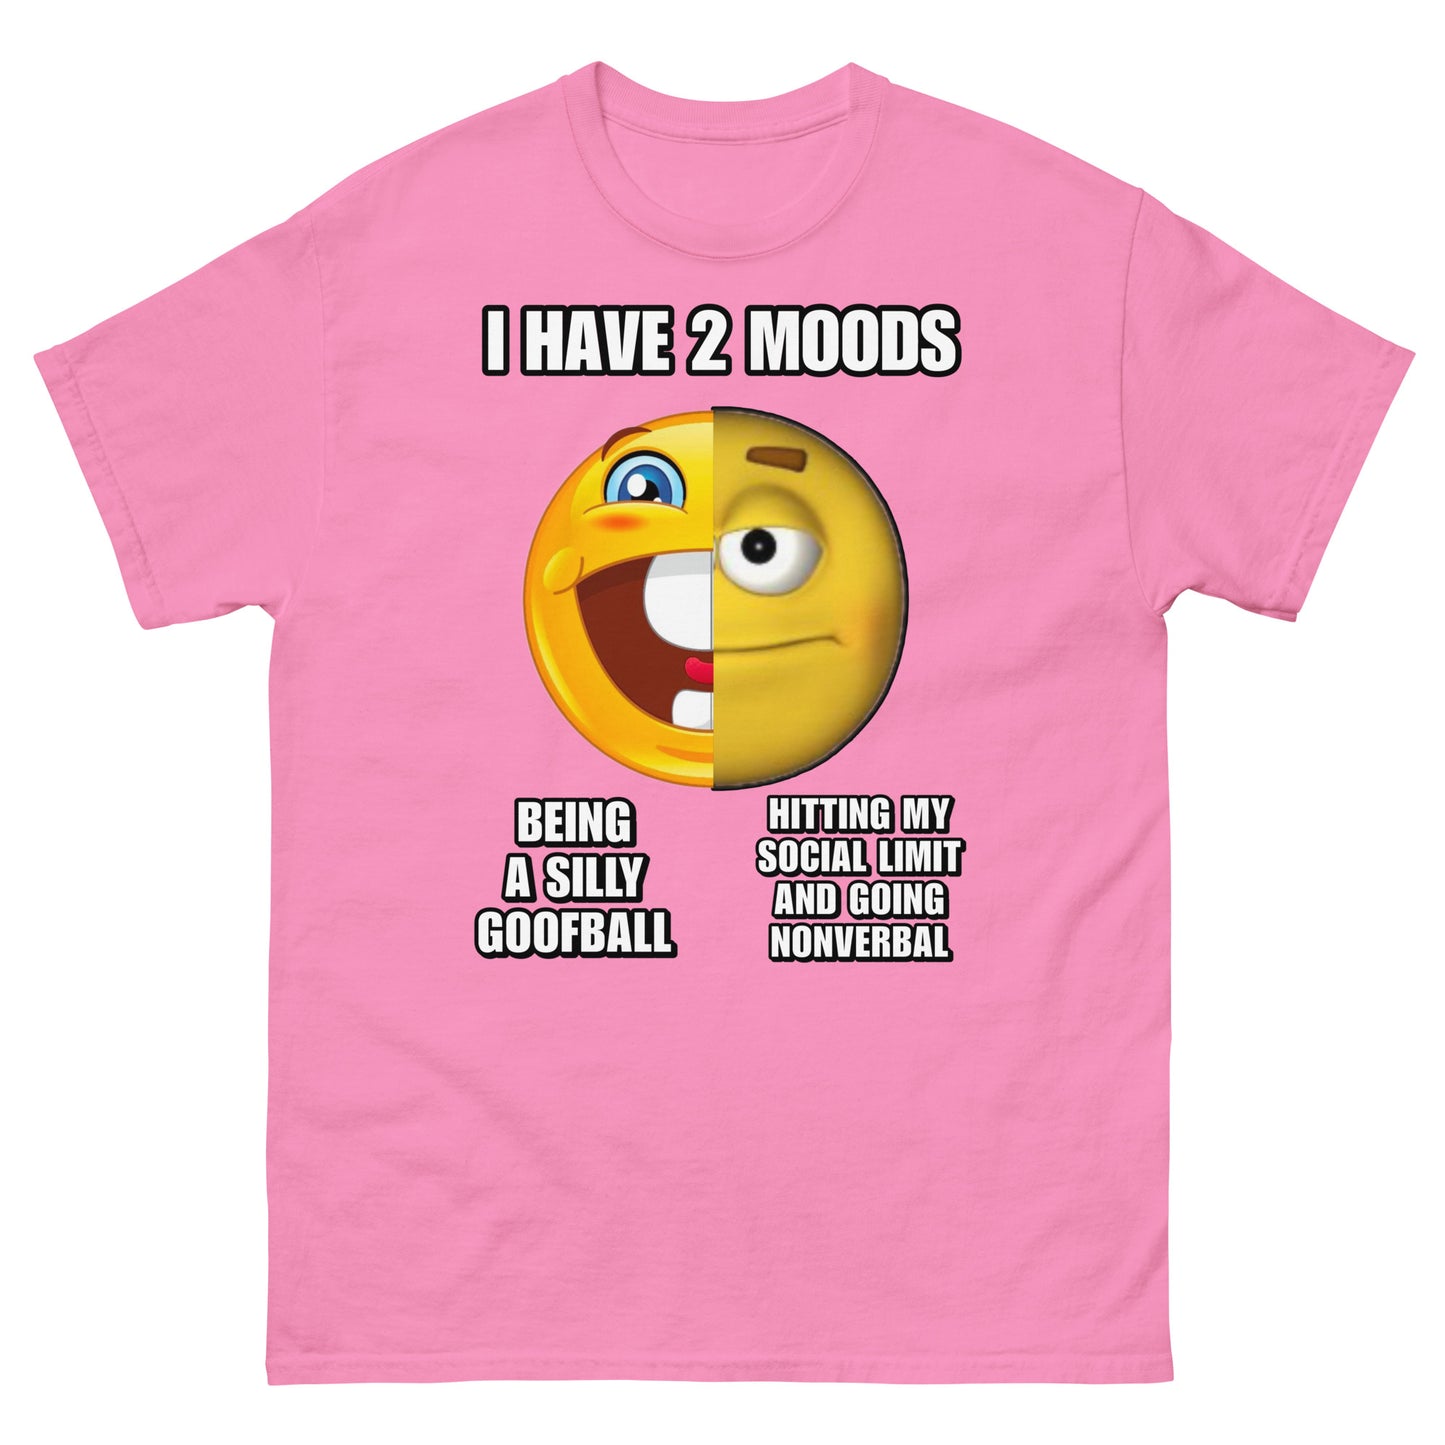 I have 2 moods Cringey Tee